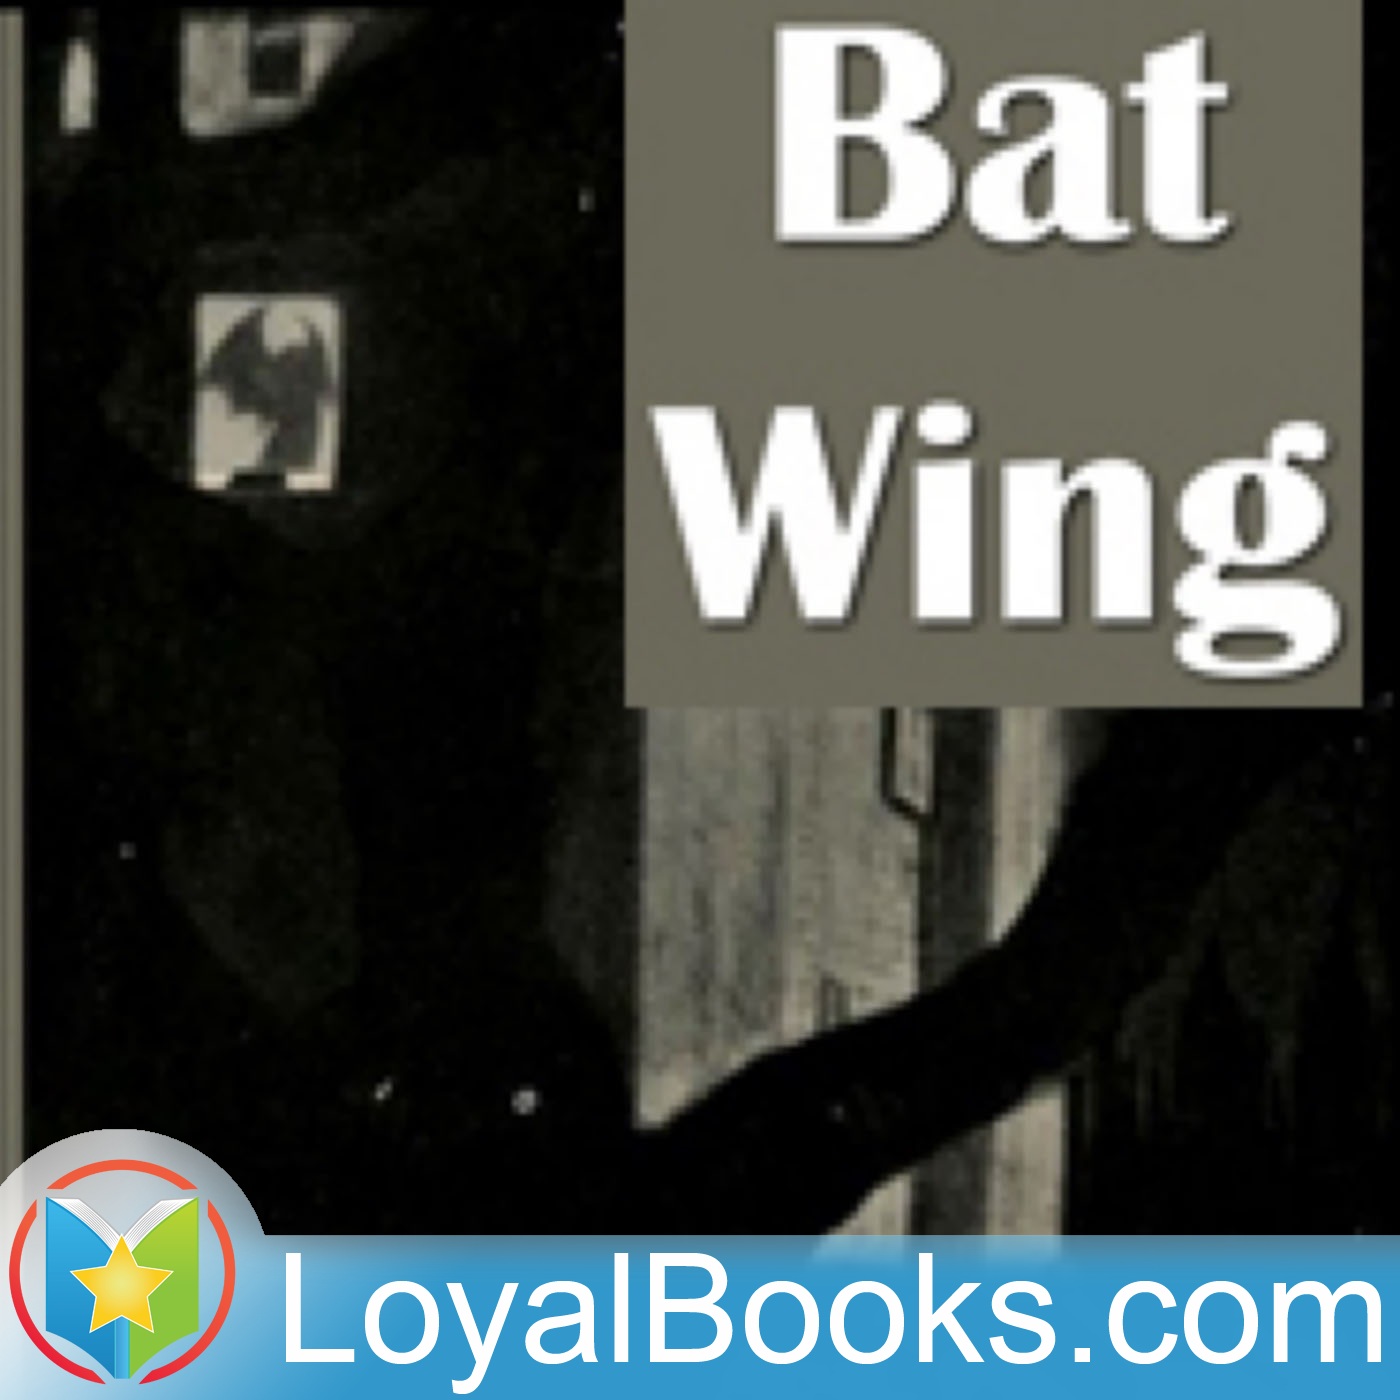 Bat Wing by Sax Rohmer